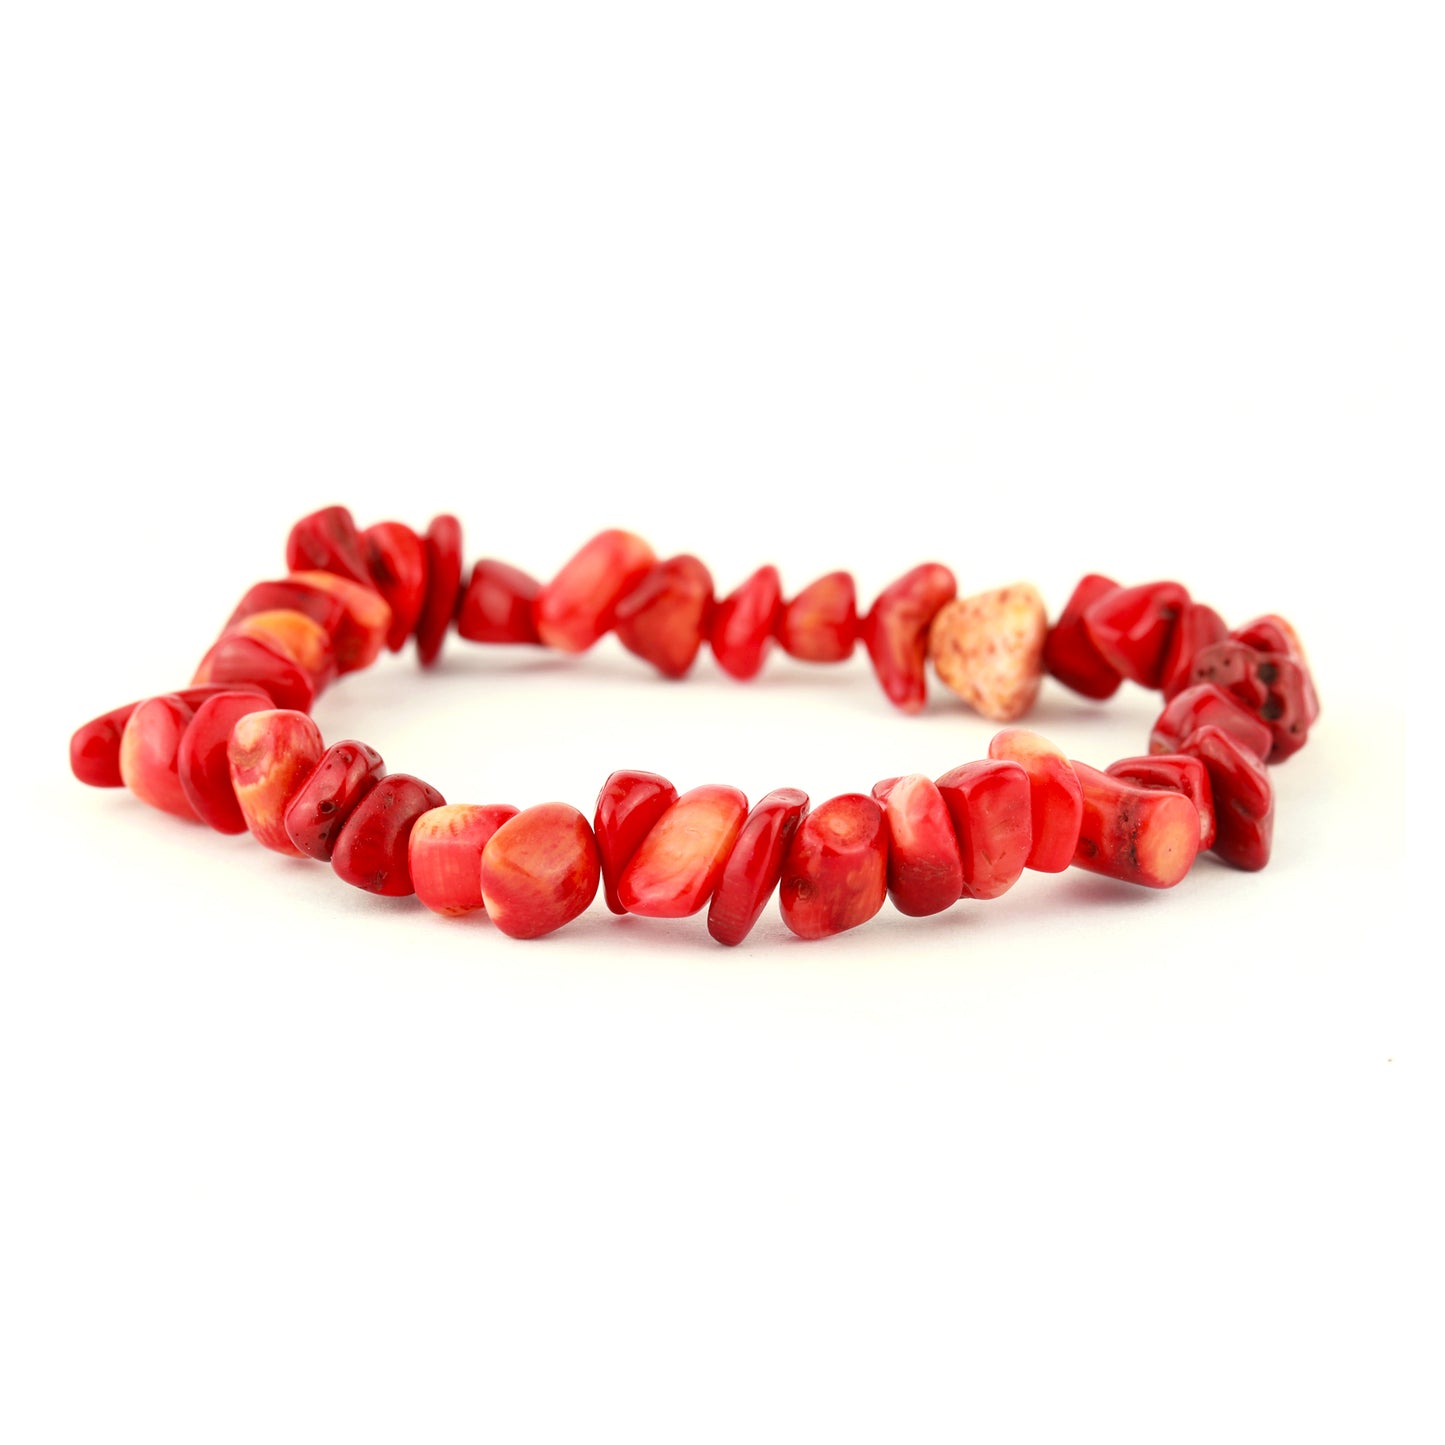 Red Coral Chips Stretch Bracelet Large